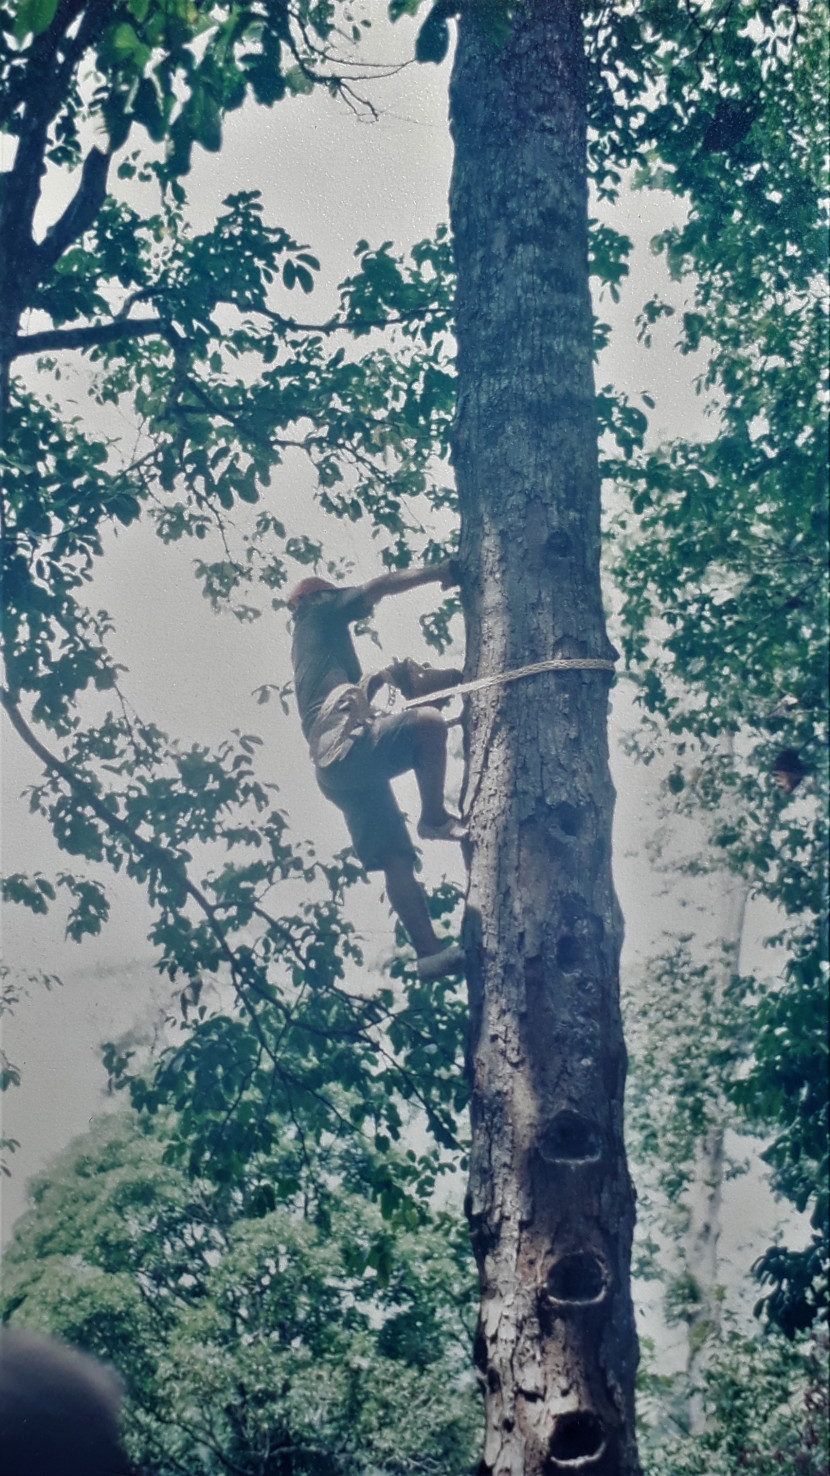 Seorang petani di Kecamatan Pesisir Selatan, Kabupaten Pesisir Barat, sedang memanjat pohon damar untuk mengambil getah damar. (Foto: SumatraLink.id/Mursalin Yasland)